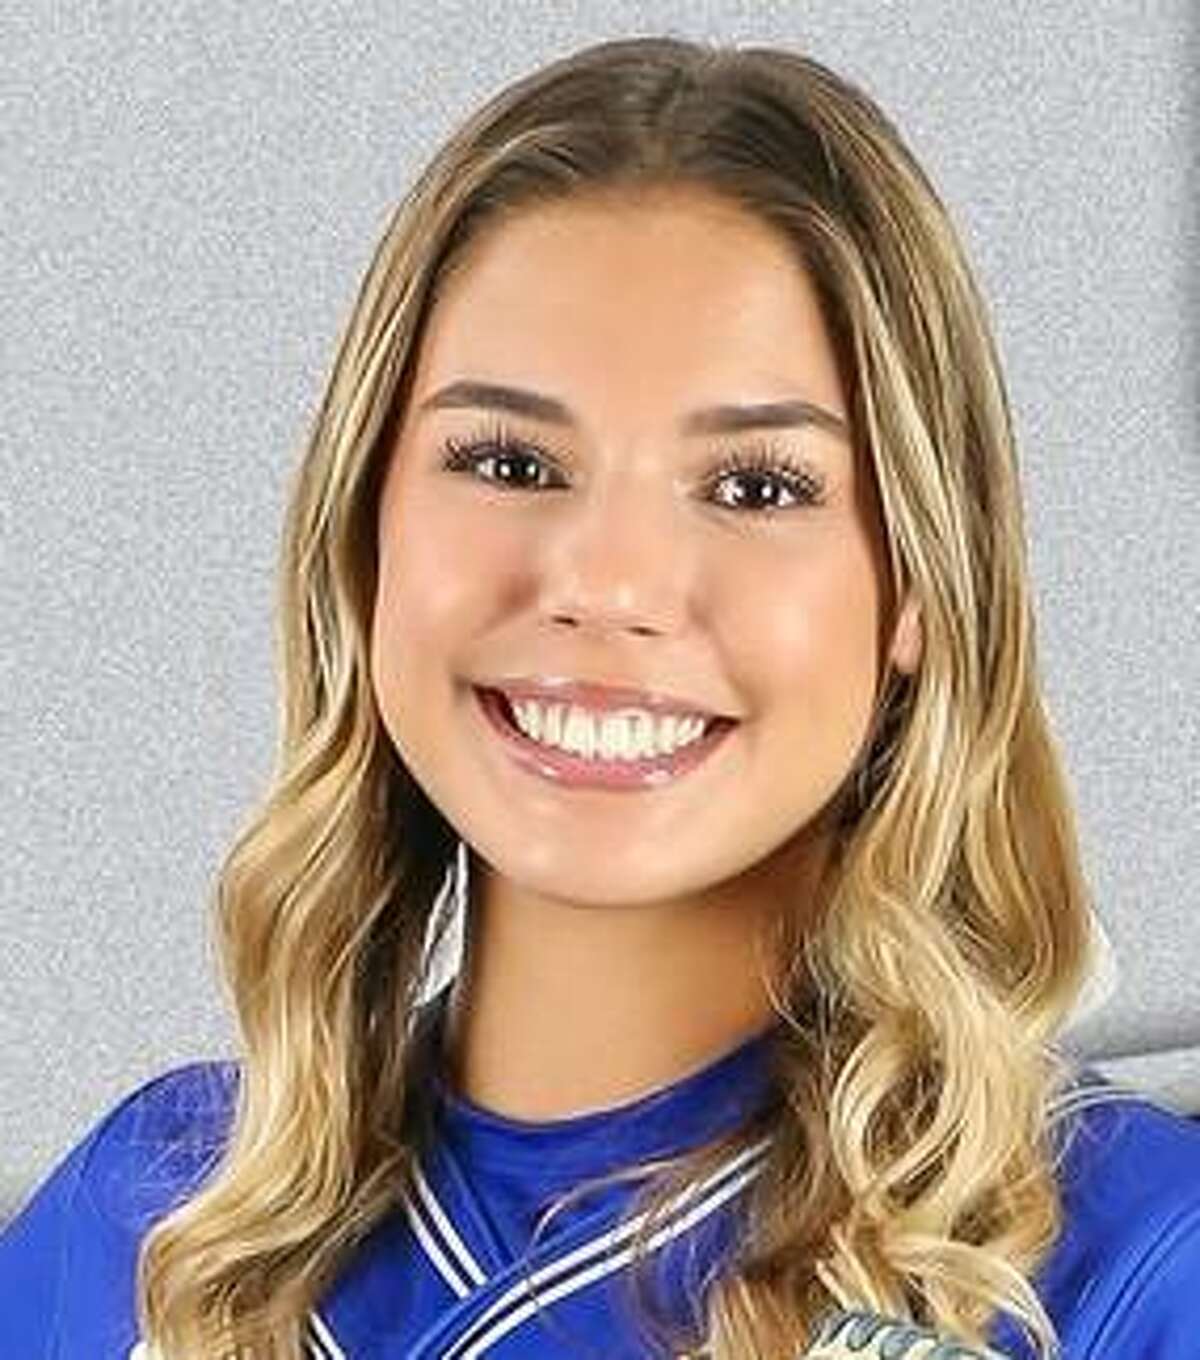 McNeese State softball player Ashley Valejo.